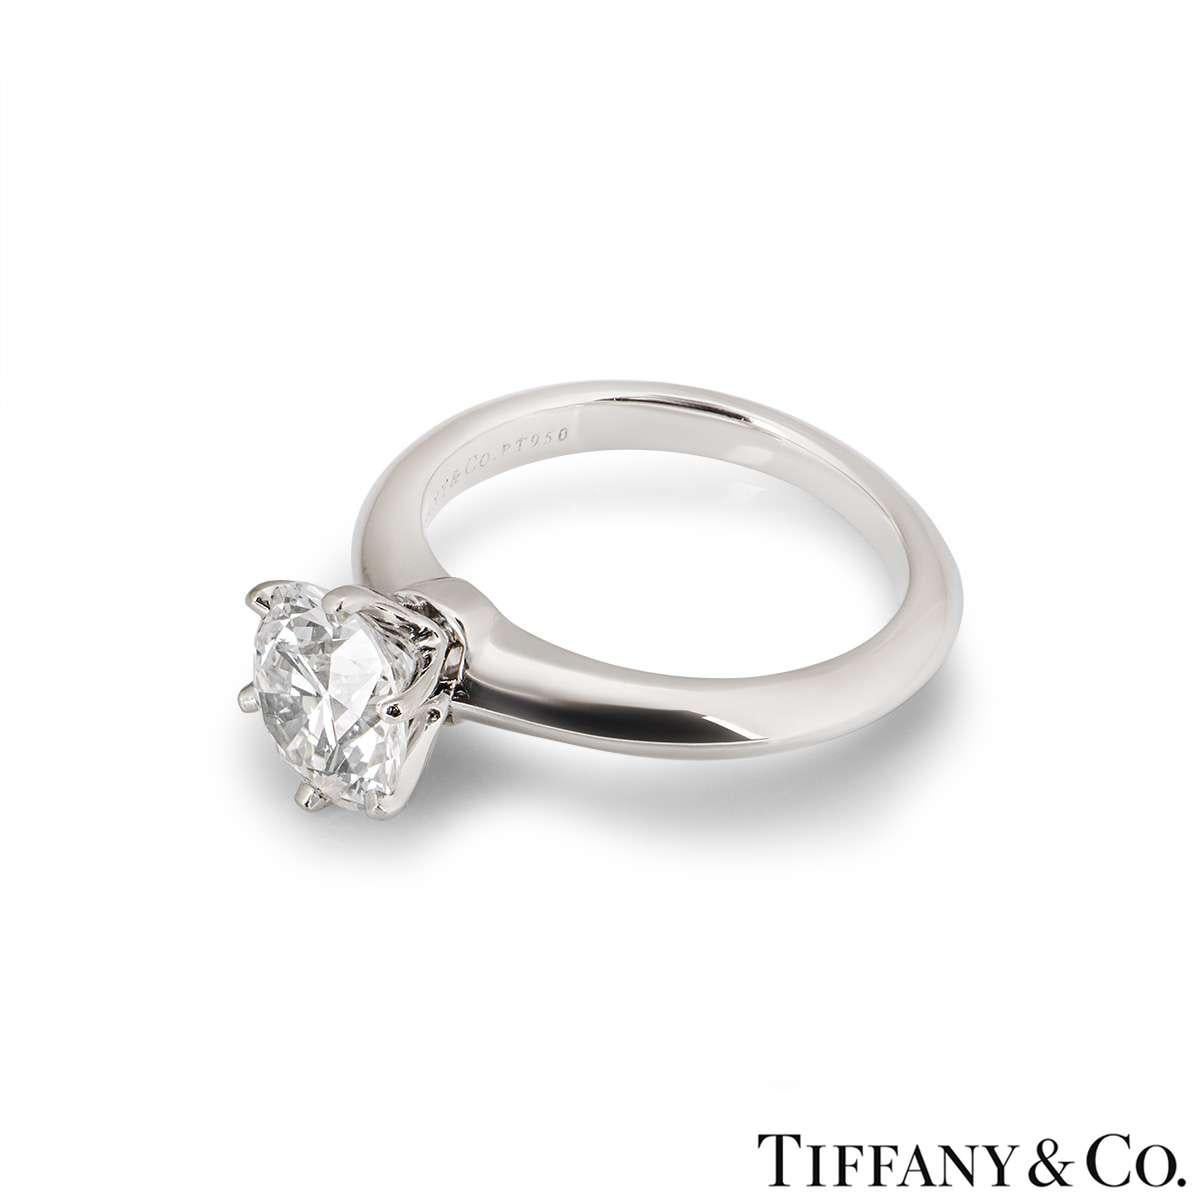 Round Cut Tiffany & Co. Platinum Diamond Setting Ring 1.53 Carat